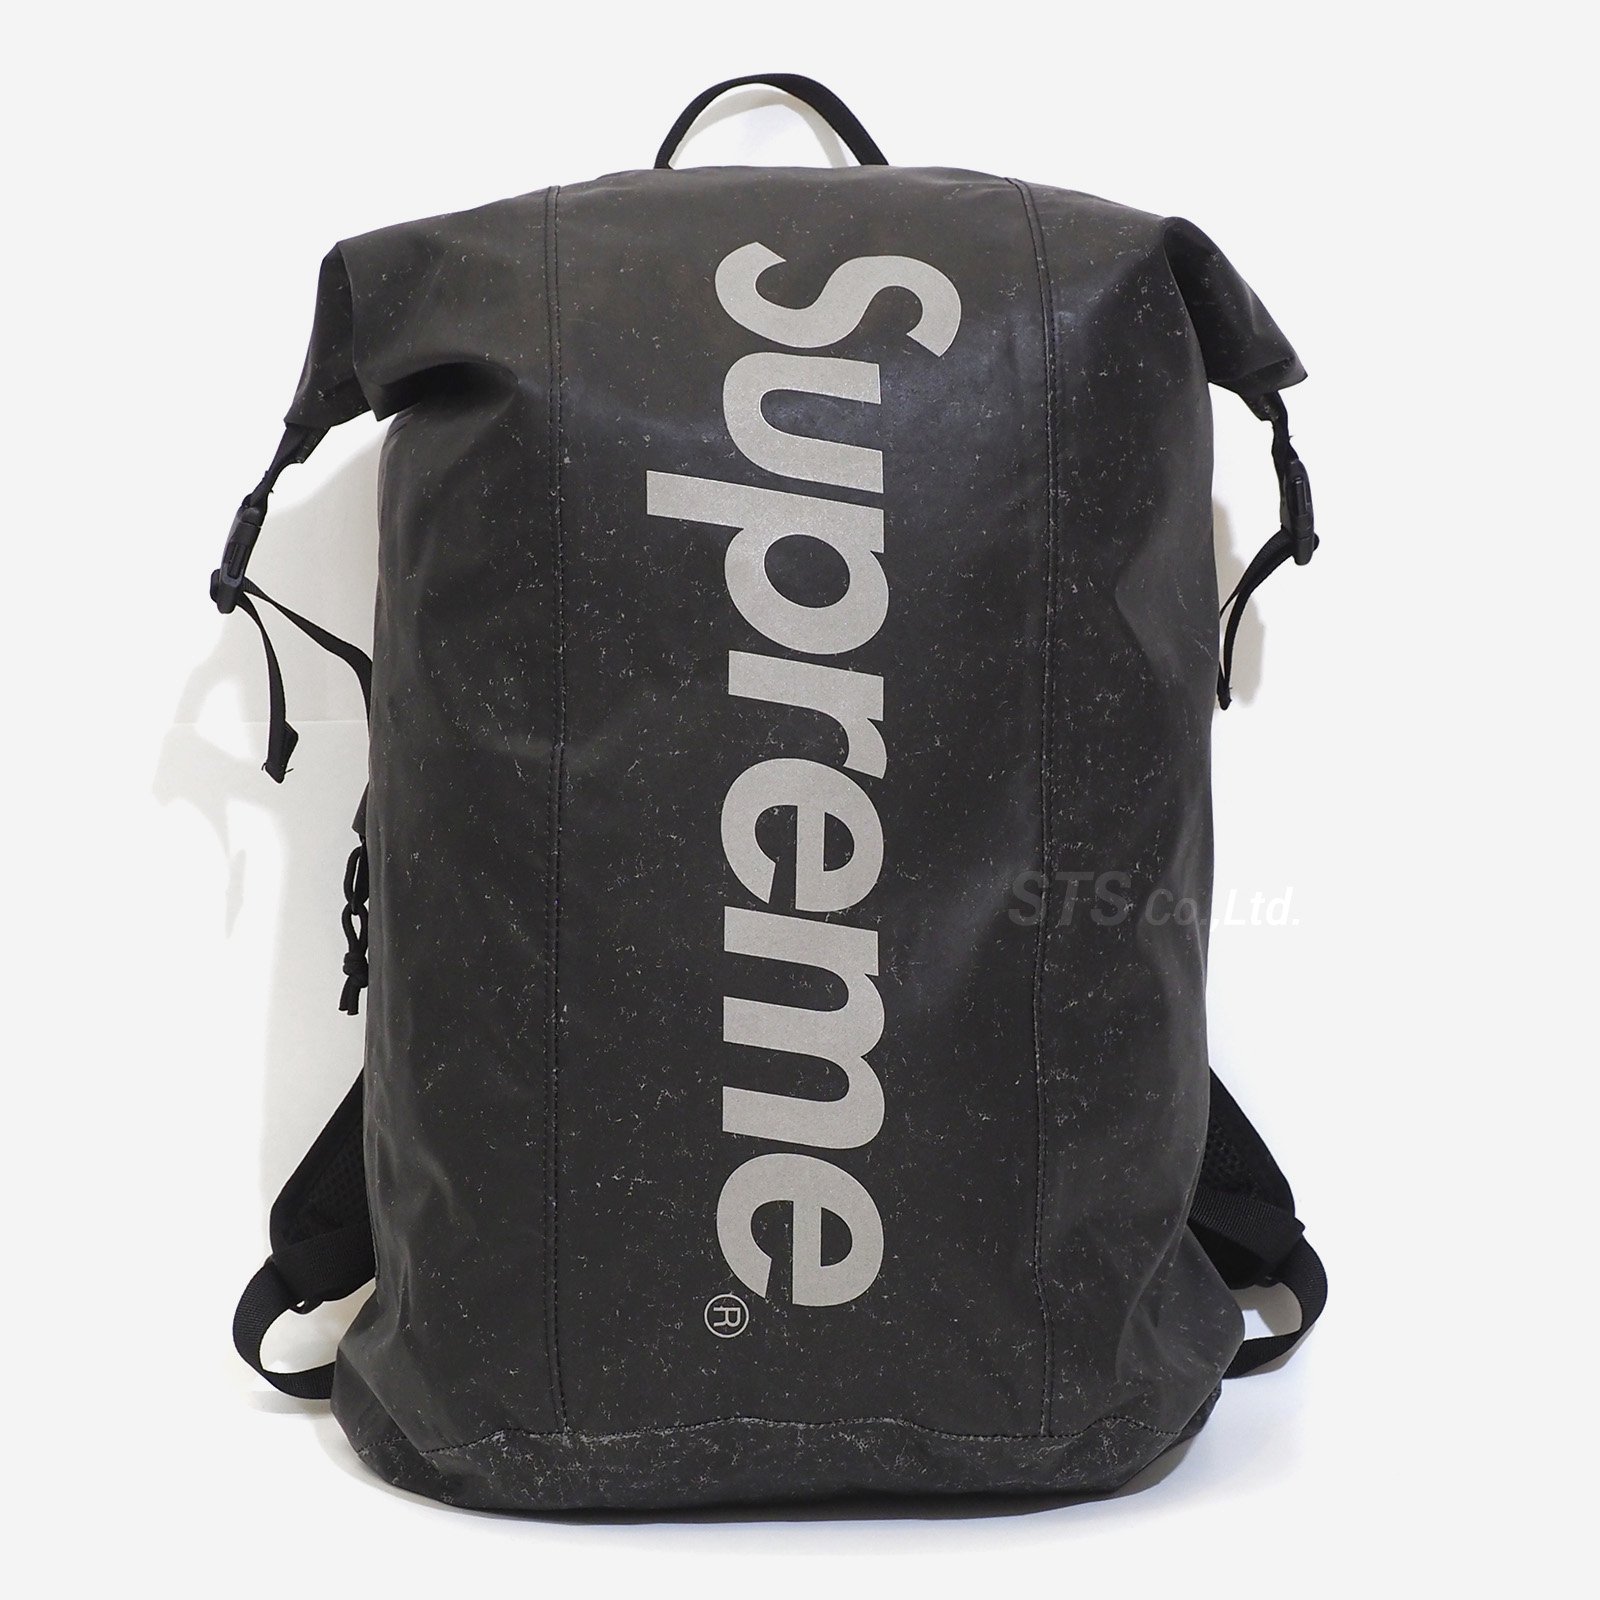 Waterproof Reflective Speckled Backpack